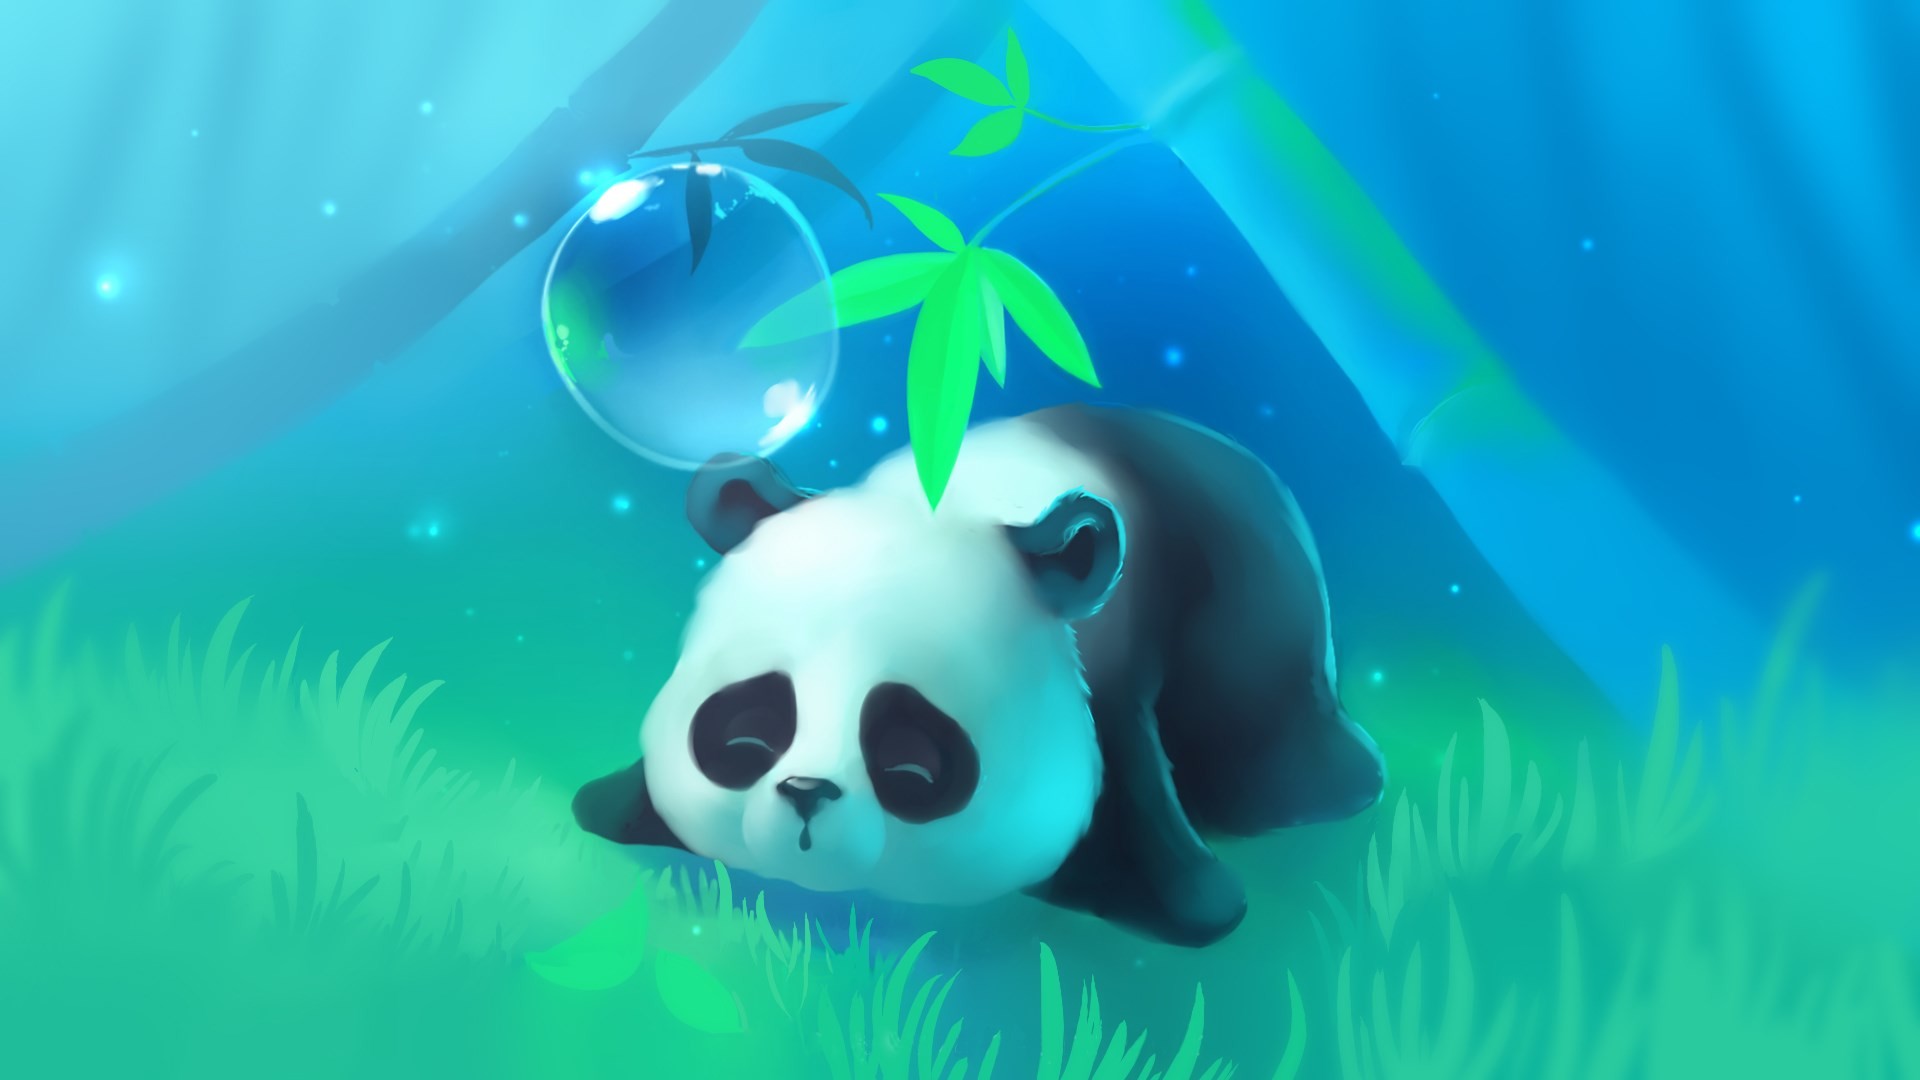 [46+] cute cartoon panda wallpaper on wallpapersafari on animated panda wallpapers